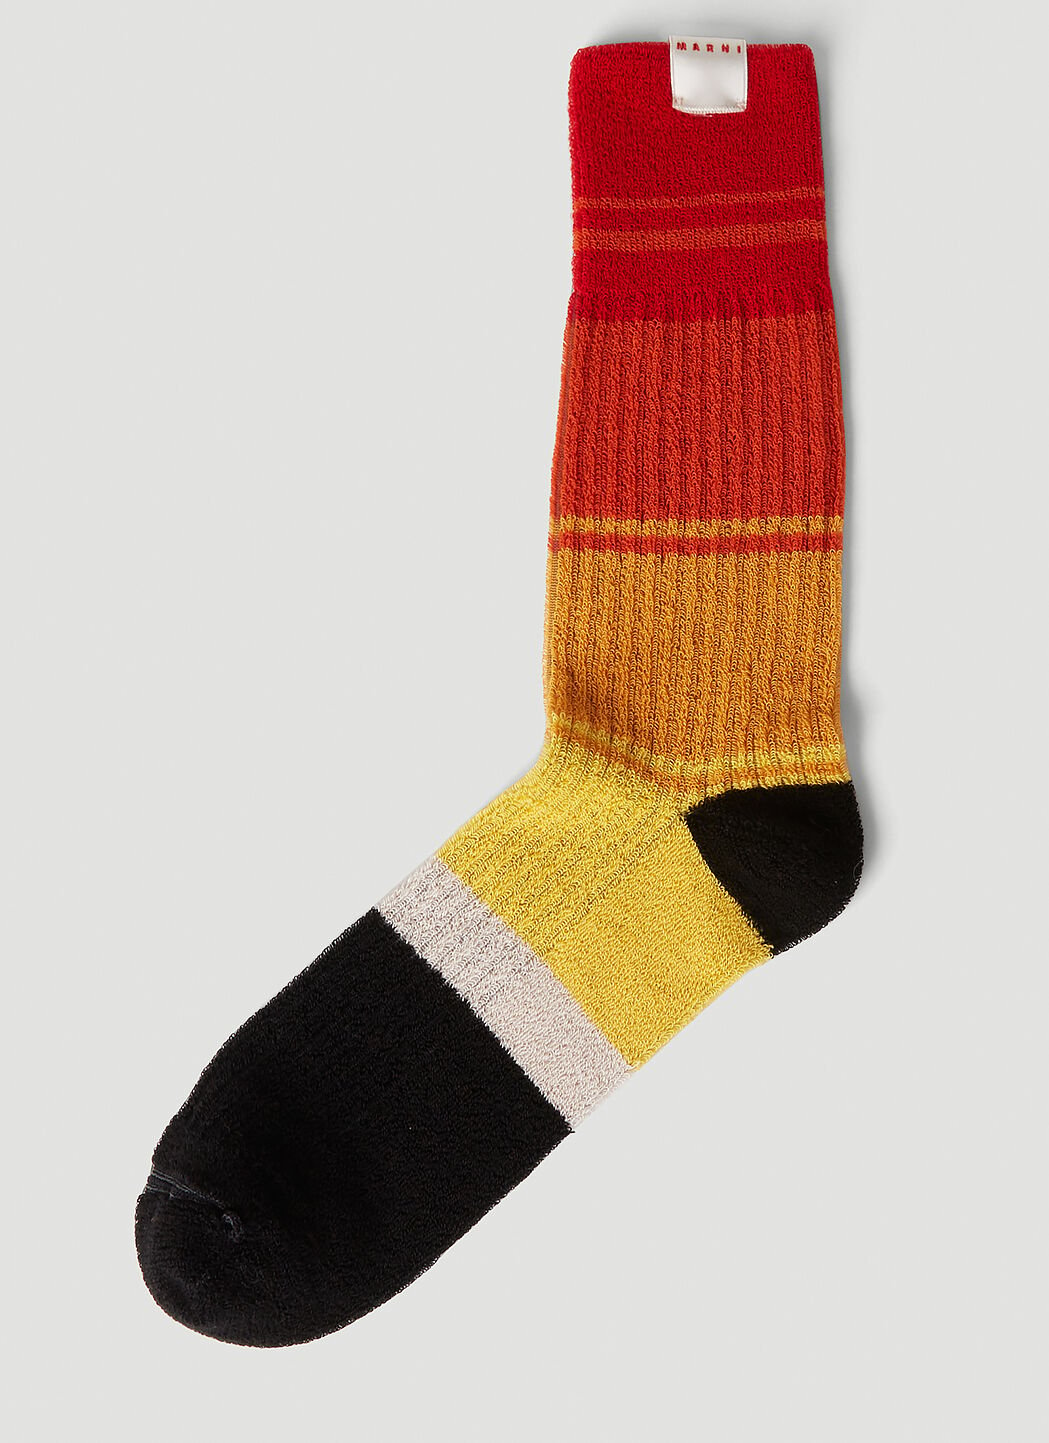 Marni Colourblock Socks Navy mni0151035